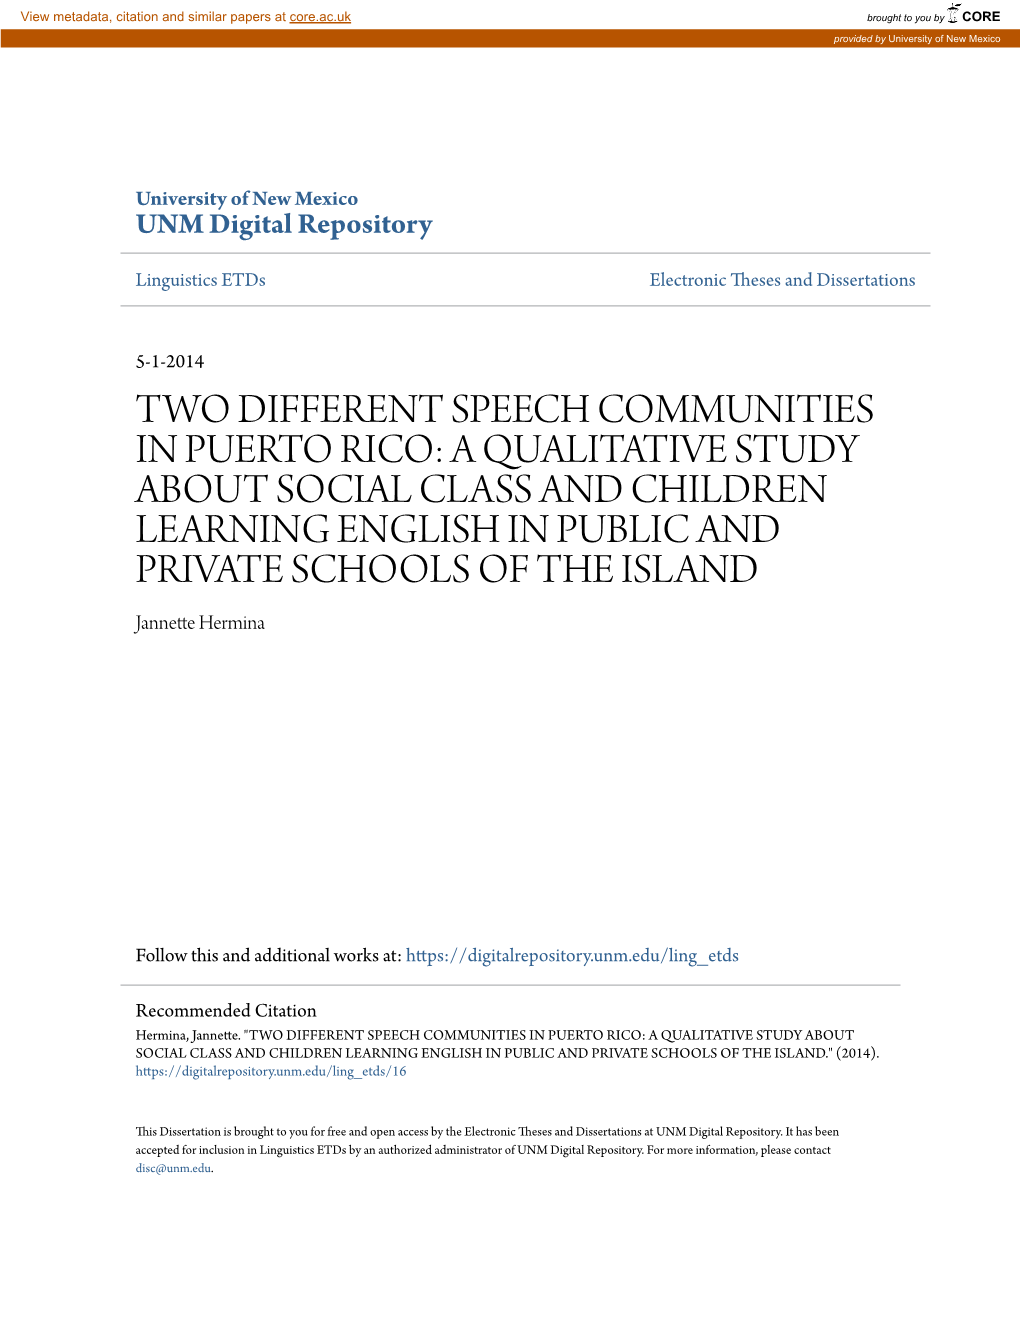 Two Different Speech Communities In